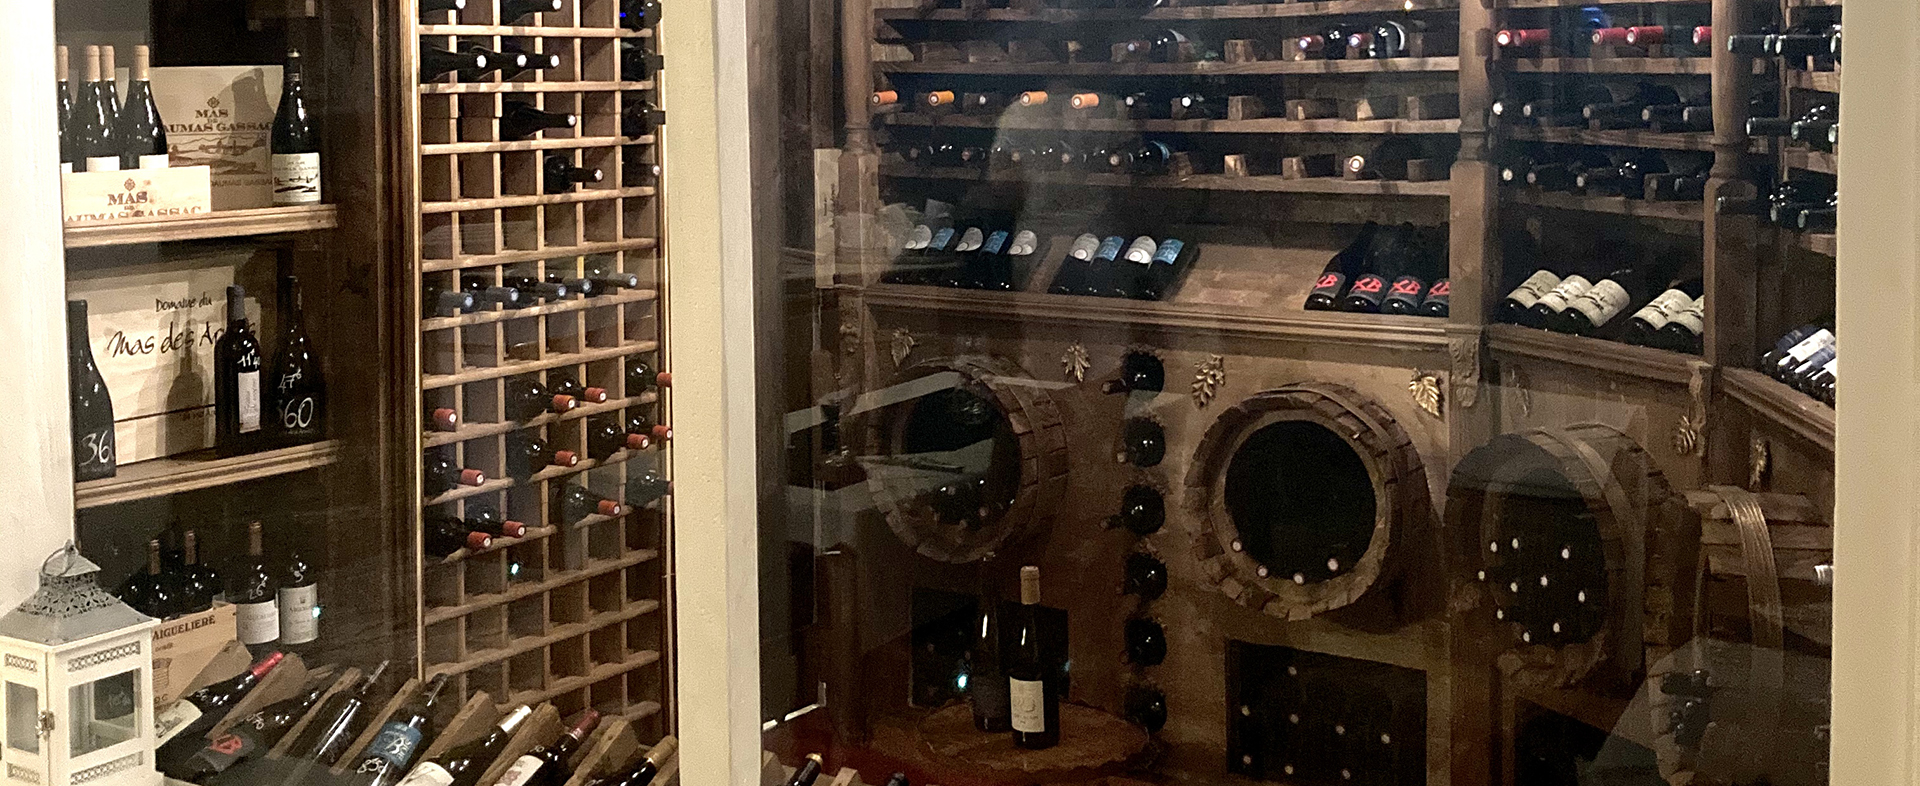 Wine cellar of the Hostellerie Saint Benoit hotel in Aniane